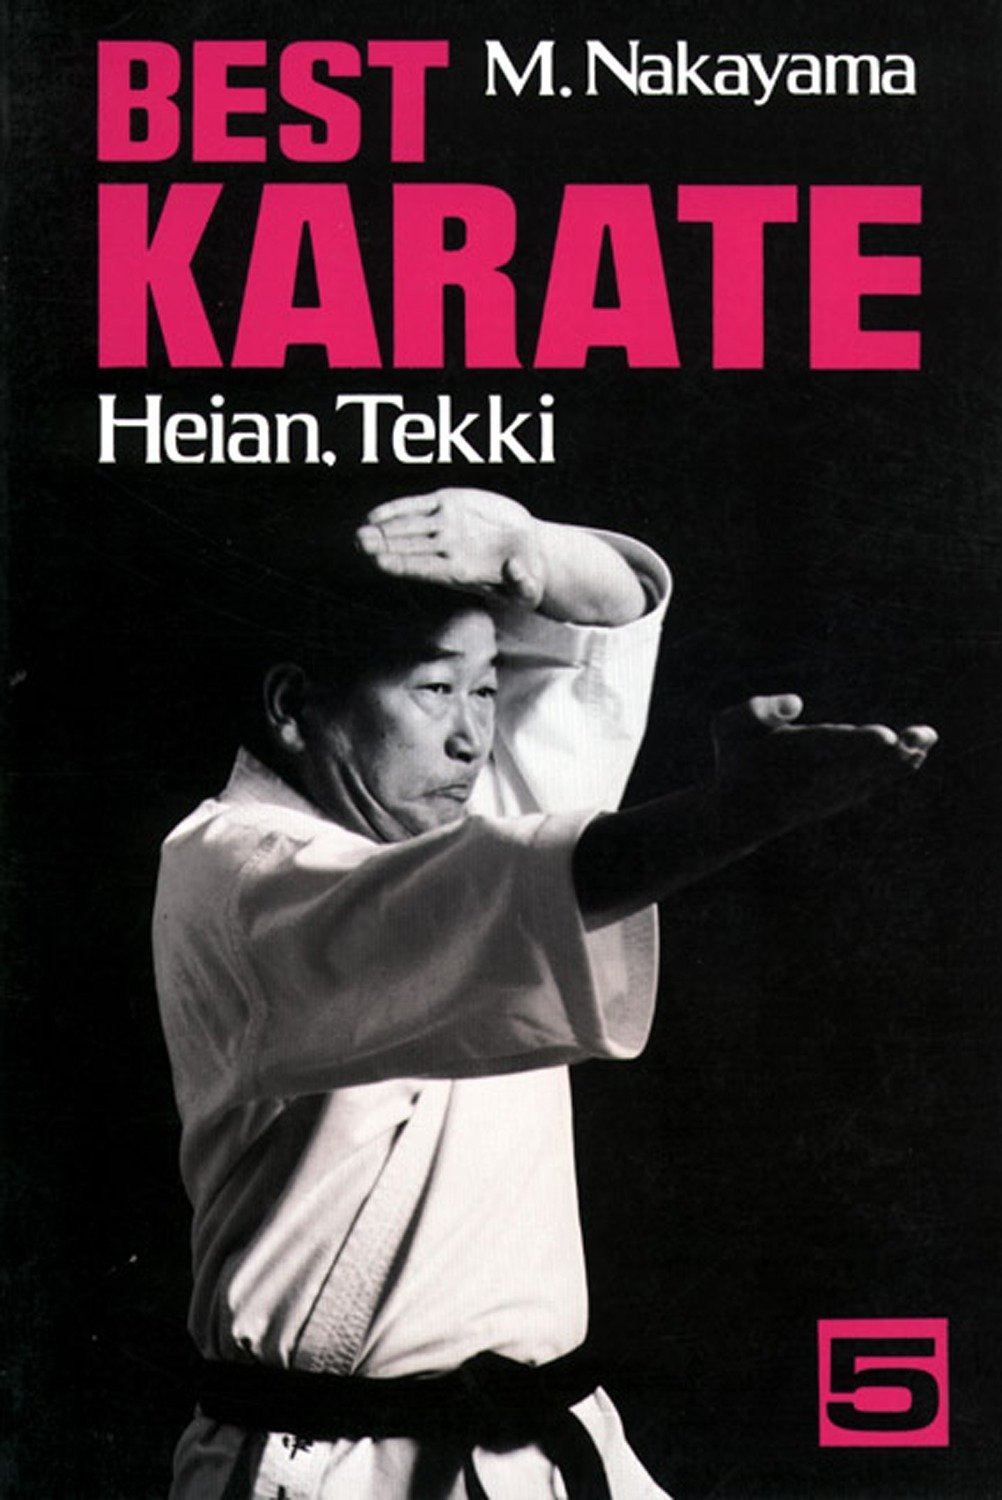 Best Karate Book 5: Heian, Tekki by Masatoshi Nakayama - Budovideos Inc